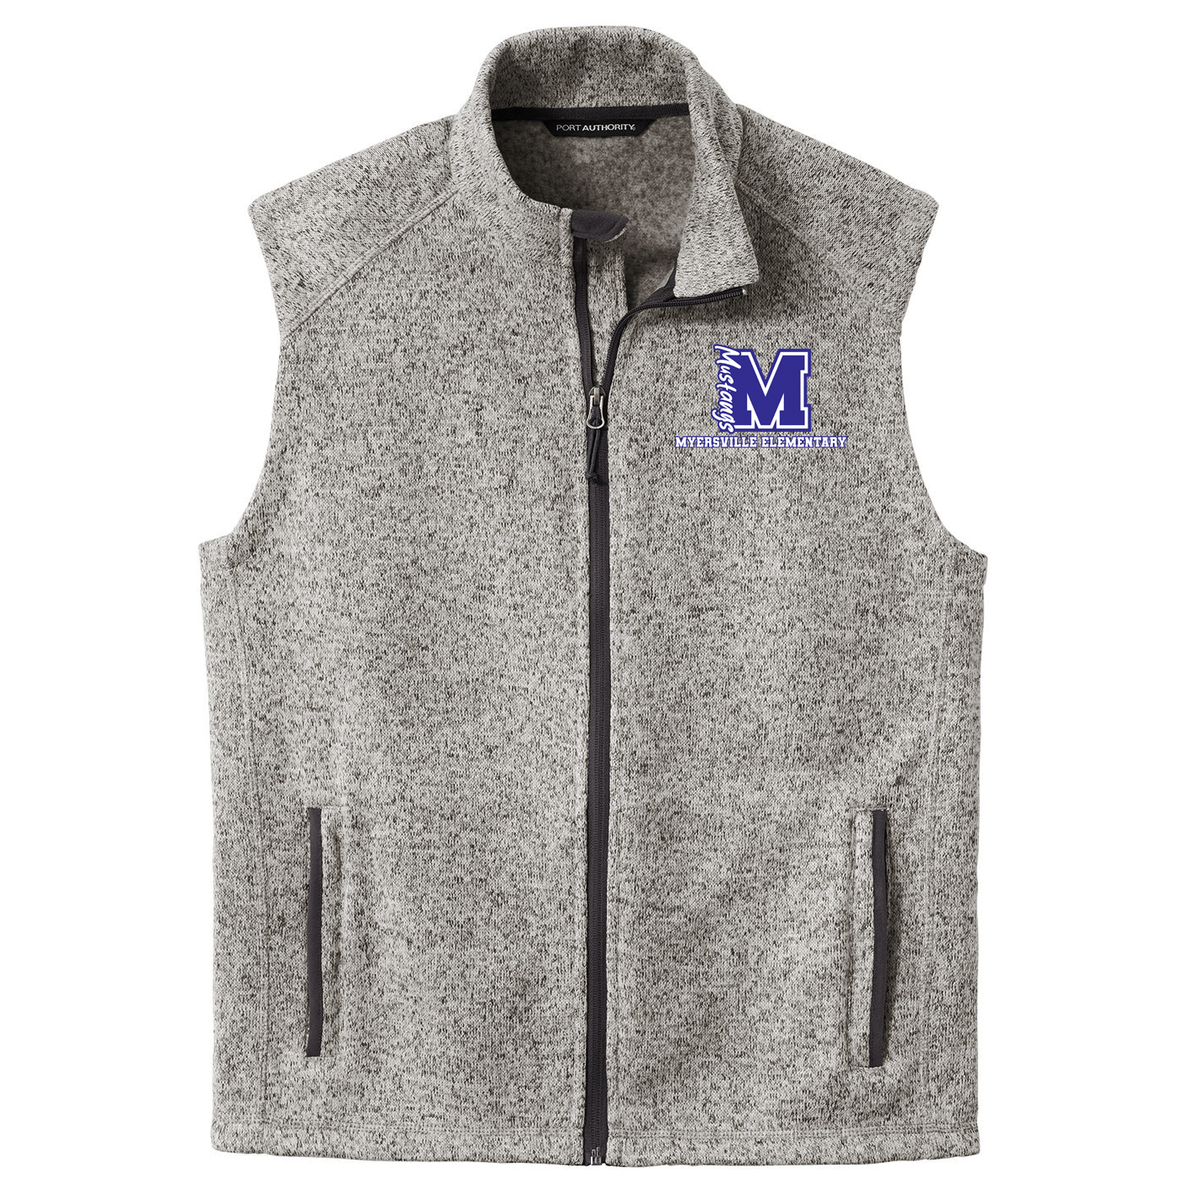 Myersville Elementary School Fleece Vest